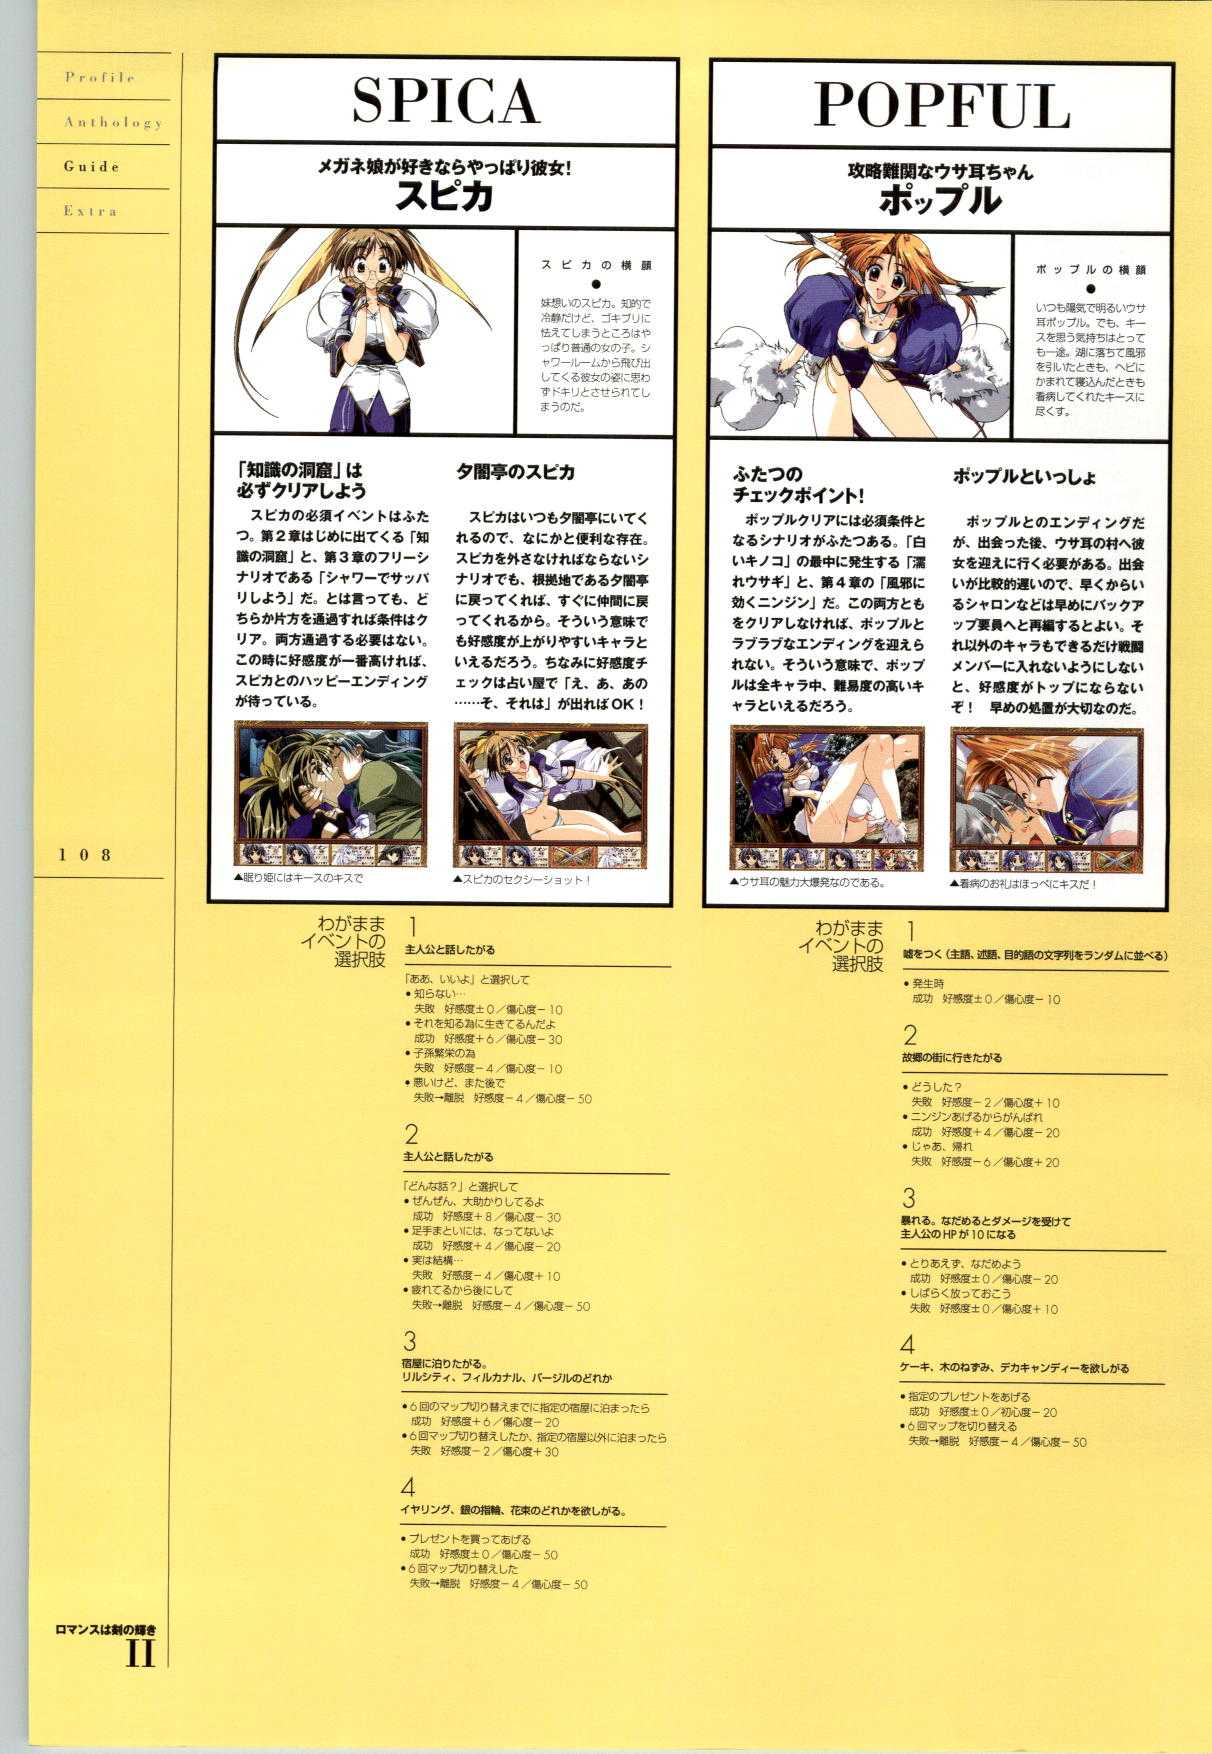 [FAIRYTALE] Romance wa Tsurugi no Kagayaki II - Koushiki Kaido - Emotional Fanbook [フェアリーテール] ロマンスは剣の輝きⅡ公式カイド Emotional FanBook